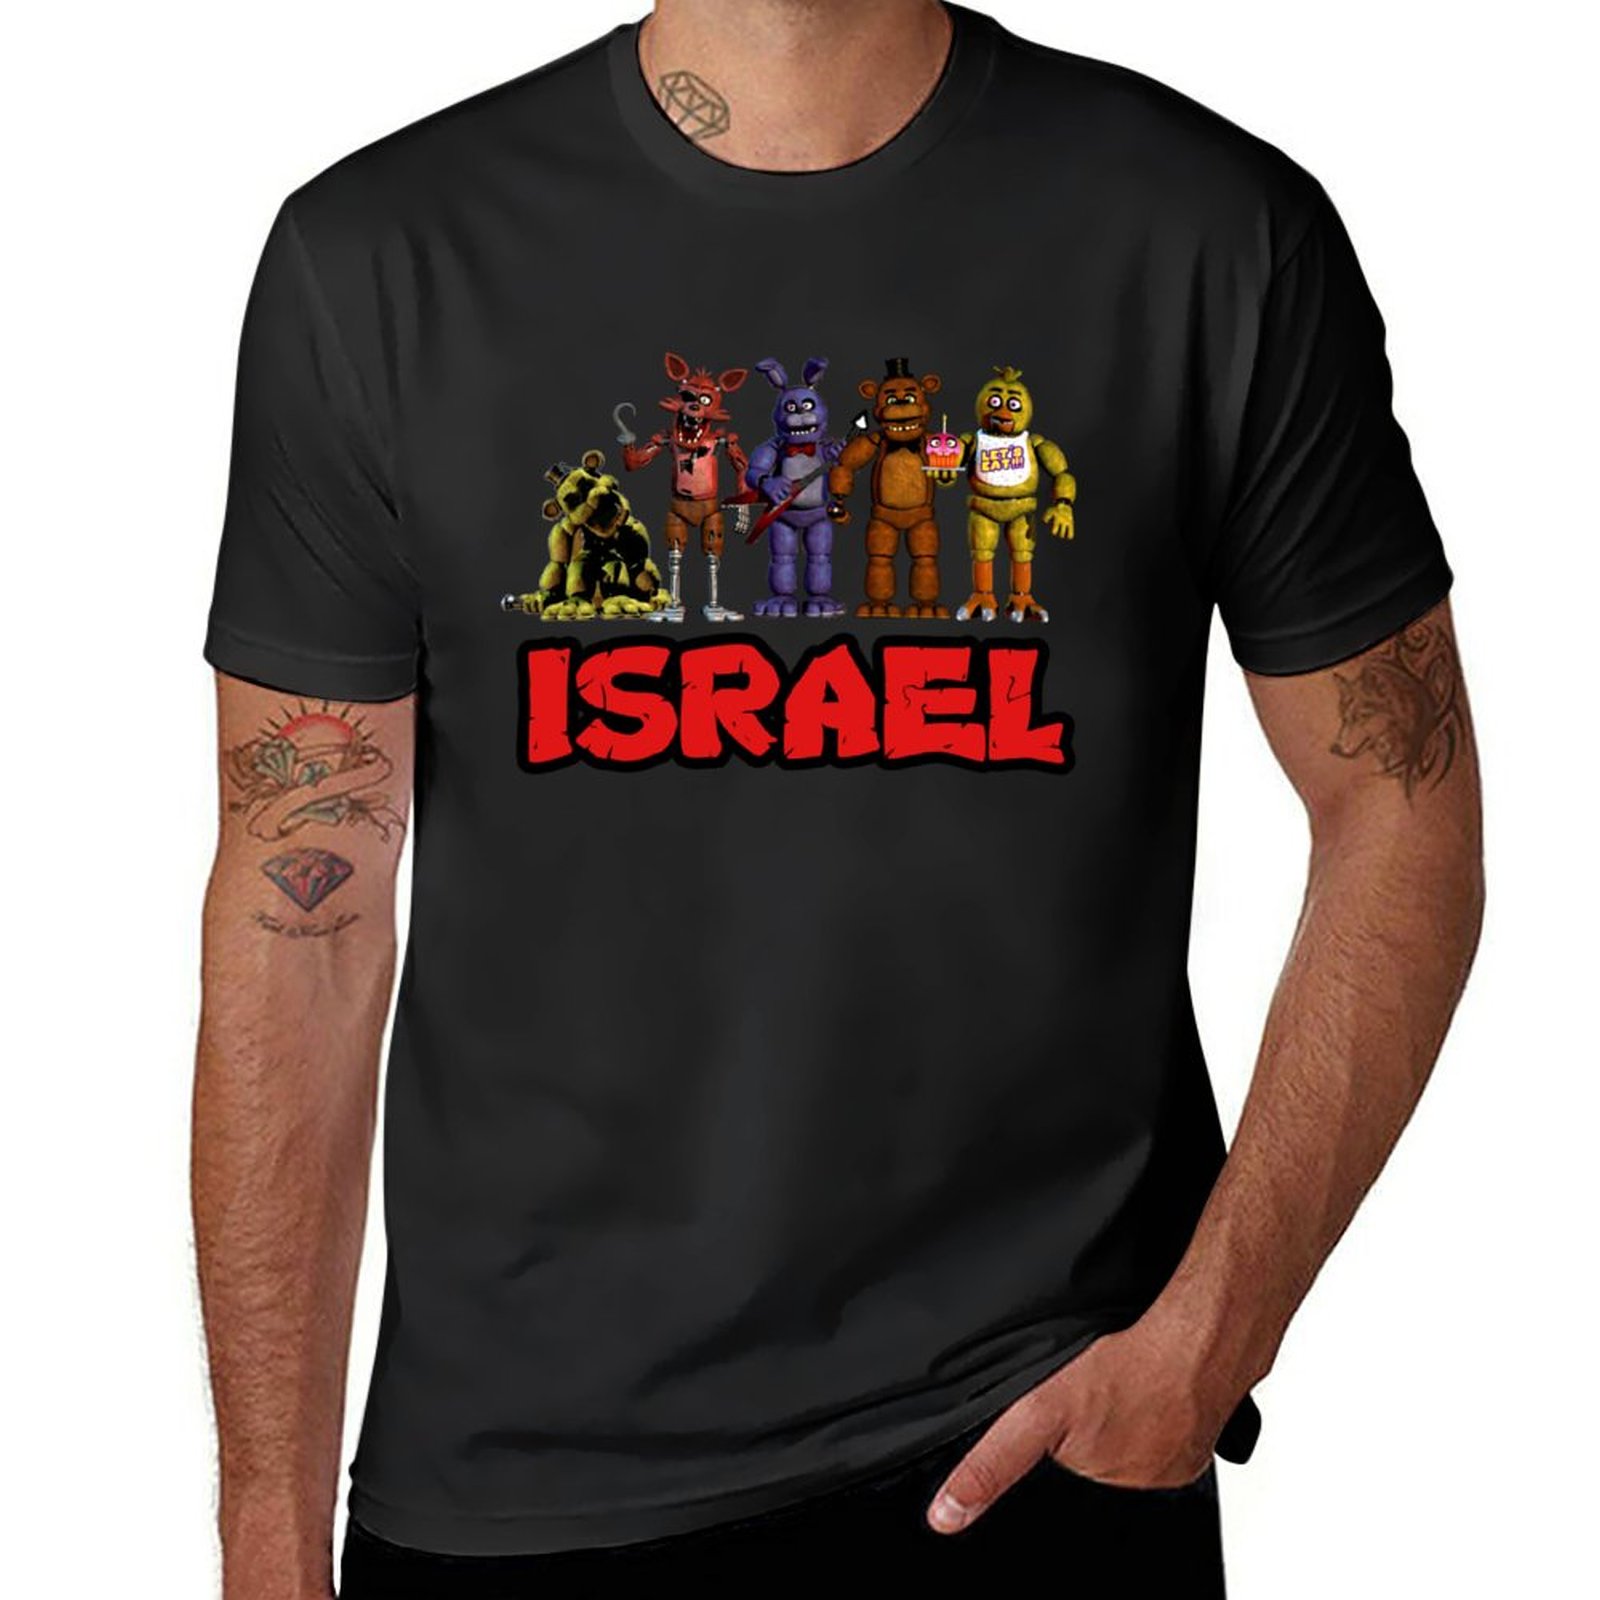 FNAF Israel T Shirt T Shirt anime clothes t shirts man big and tall t shirts - FNAF Plush